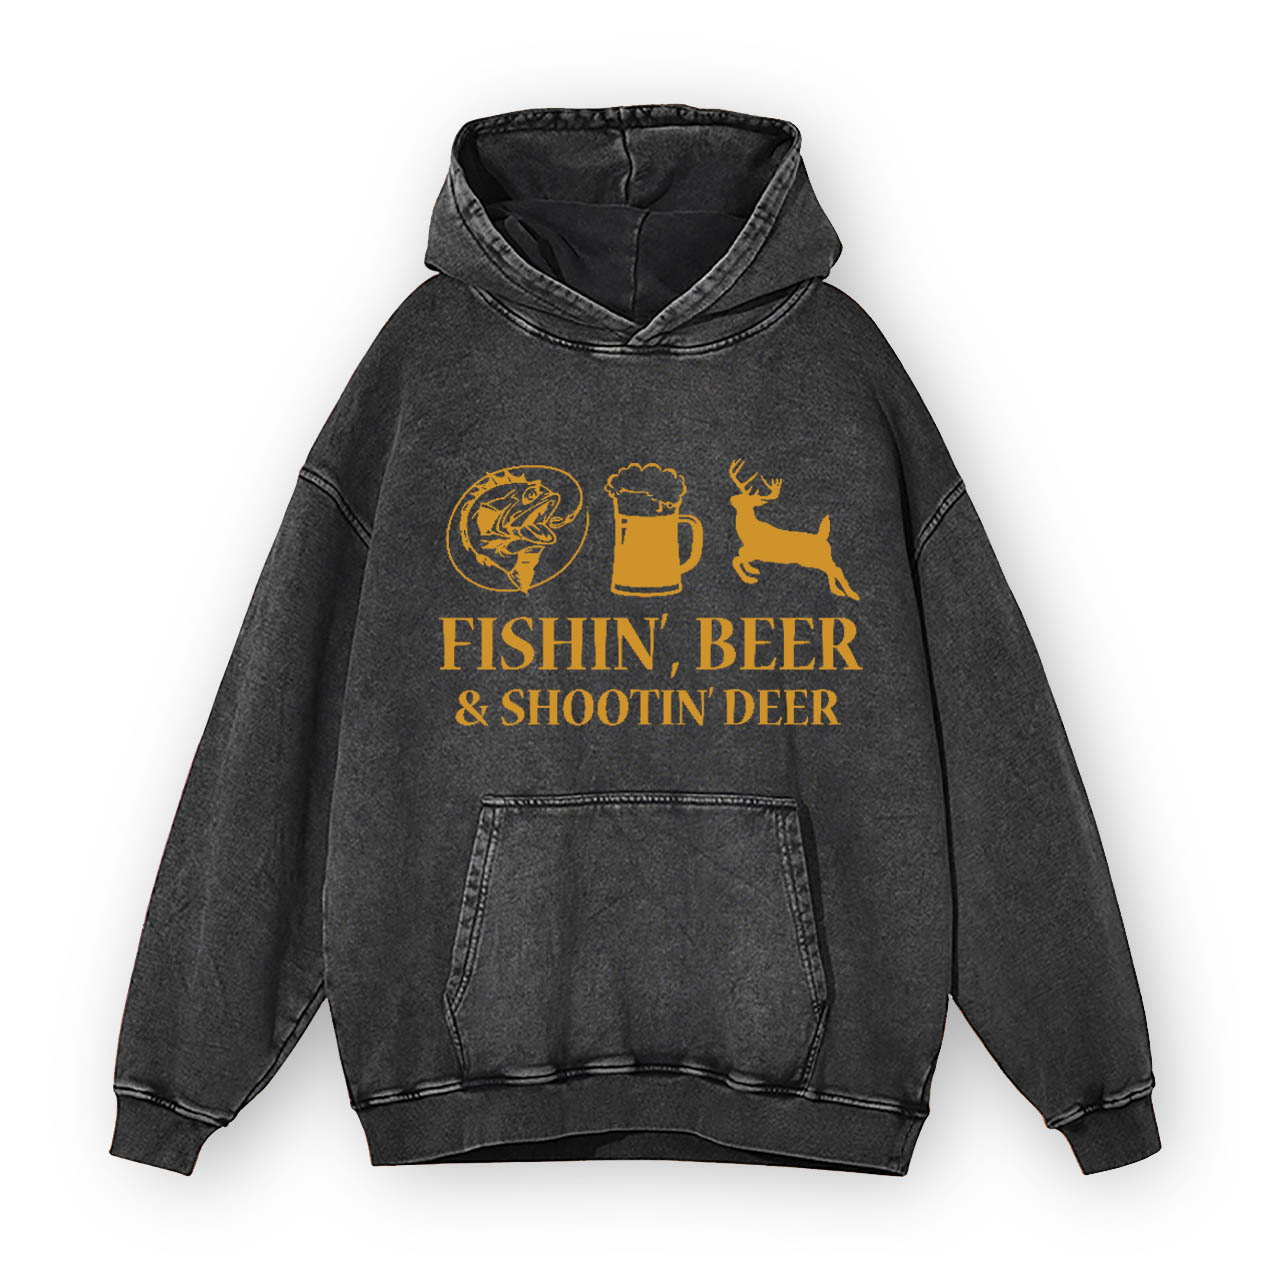 Fishin', Beer & Shootin' Deer Funny Garment-Dye Hoodies